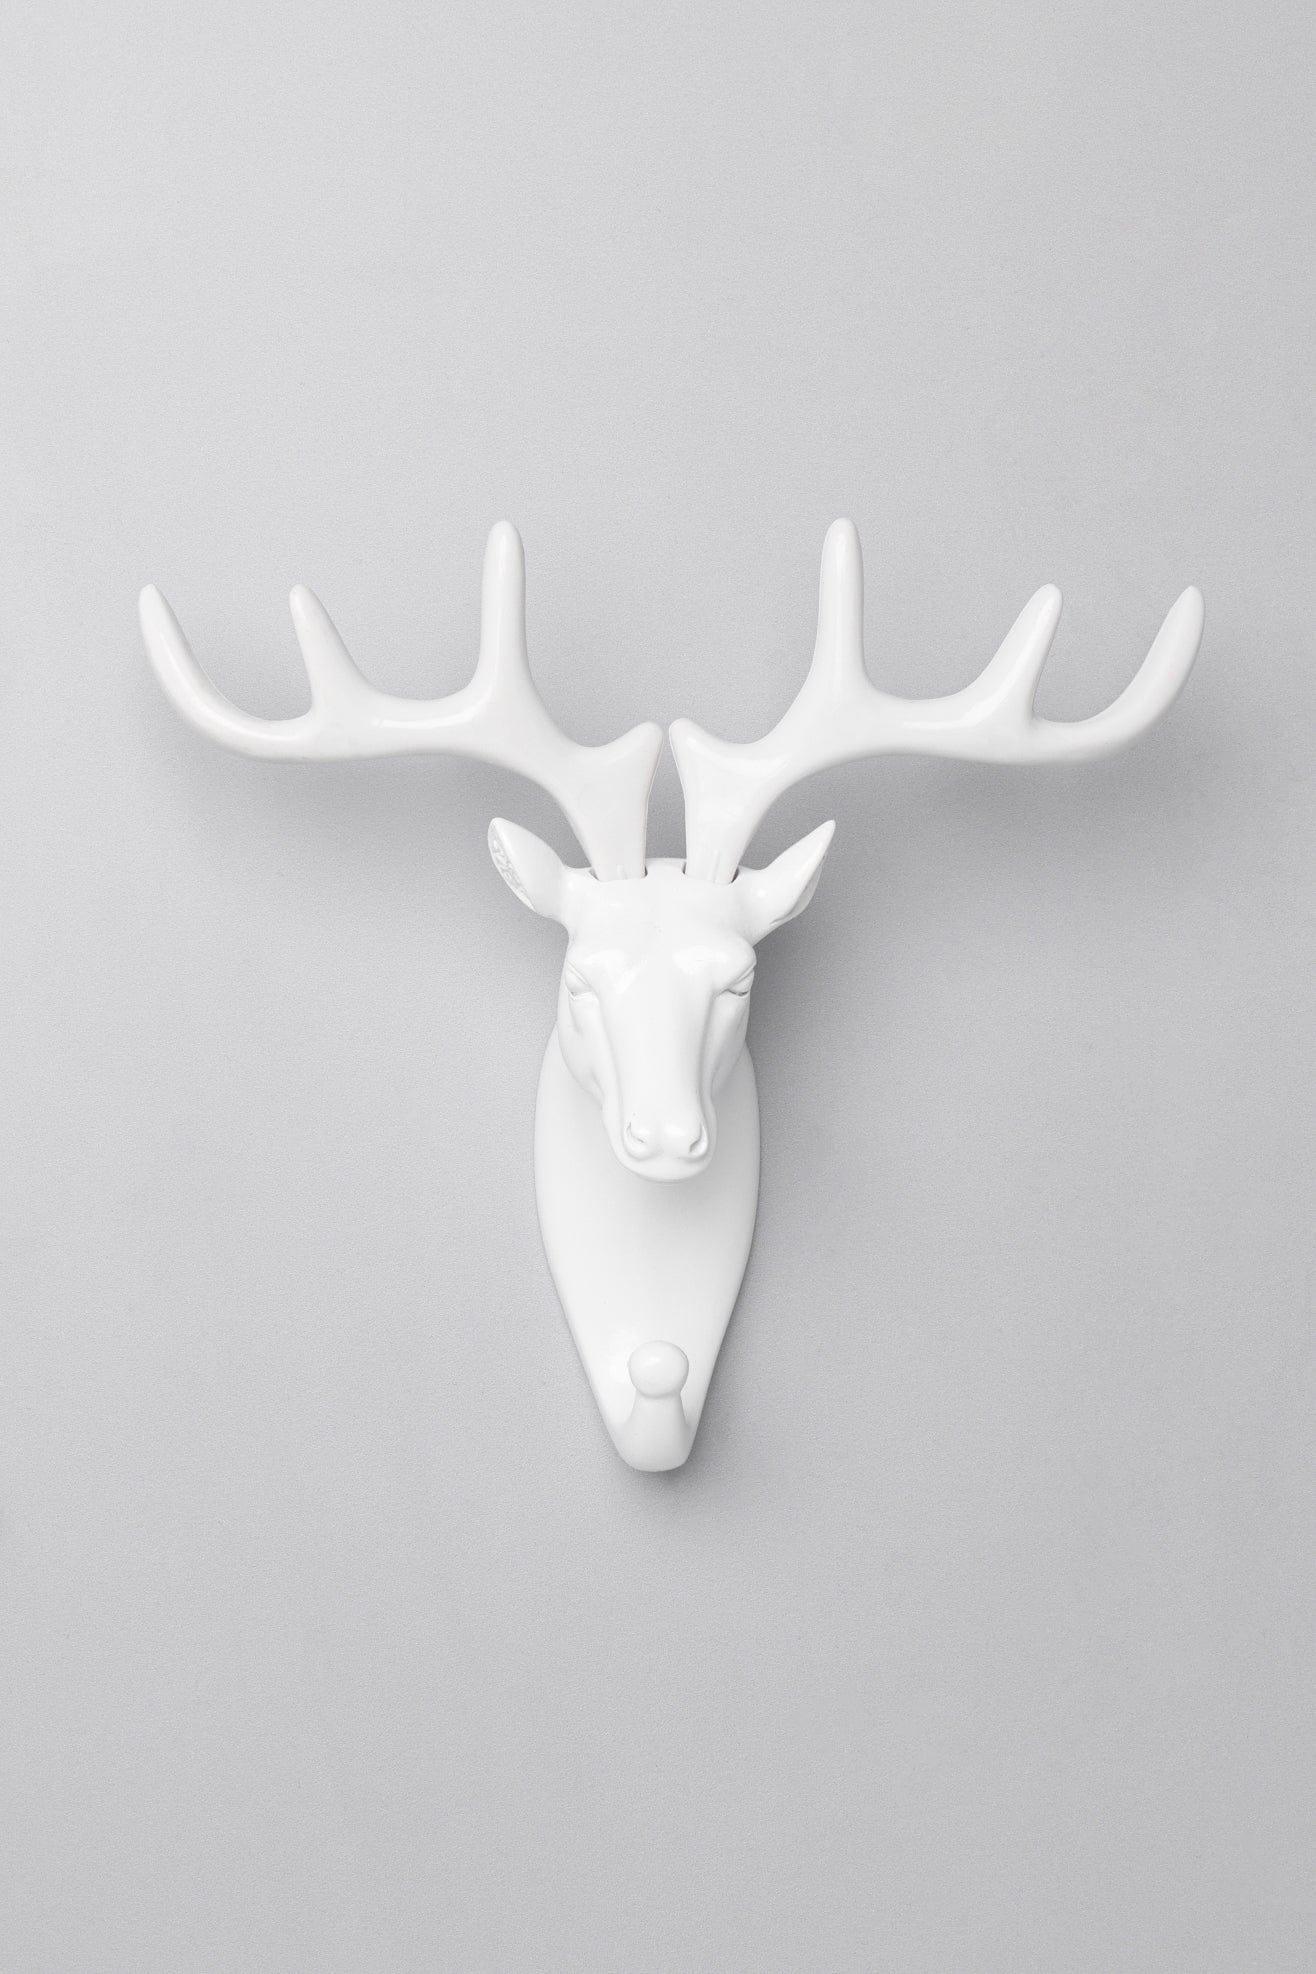 Gdecorstore All Hooks White / Deer Ornamental White Animal Heads Wildlife Solid Resin Wall Organizer Coat Hook